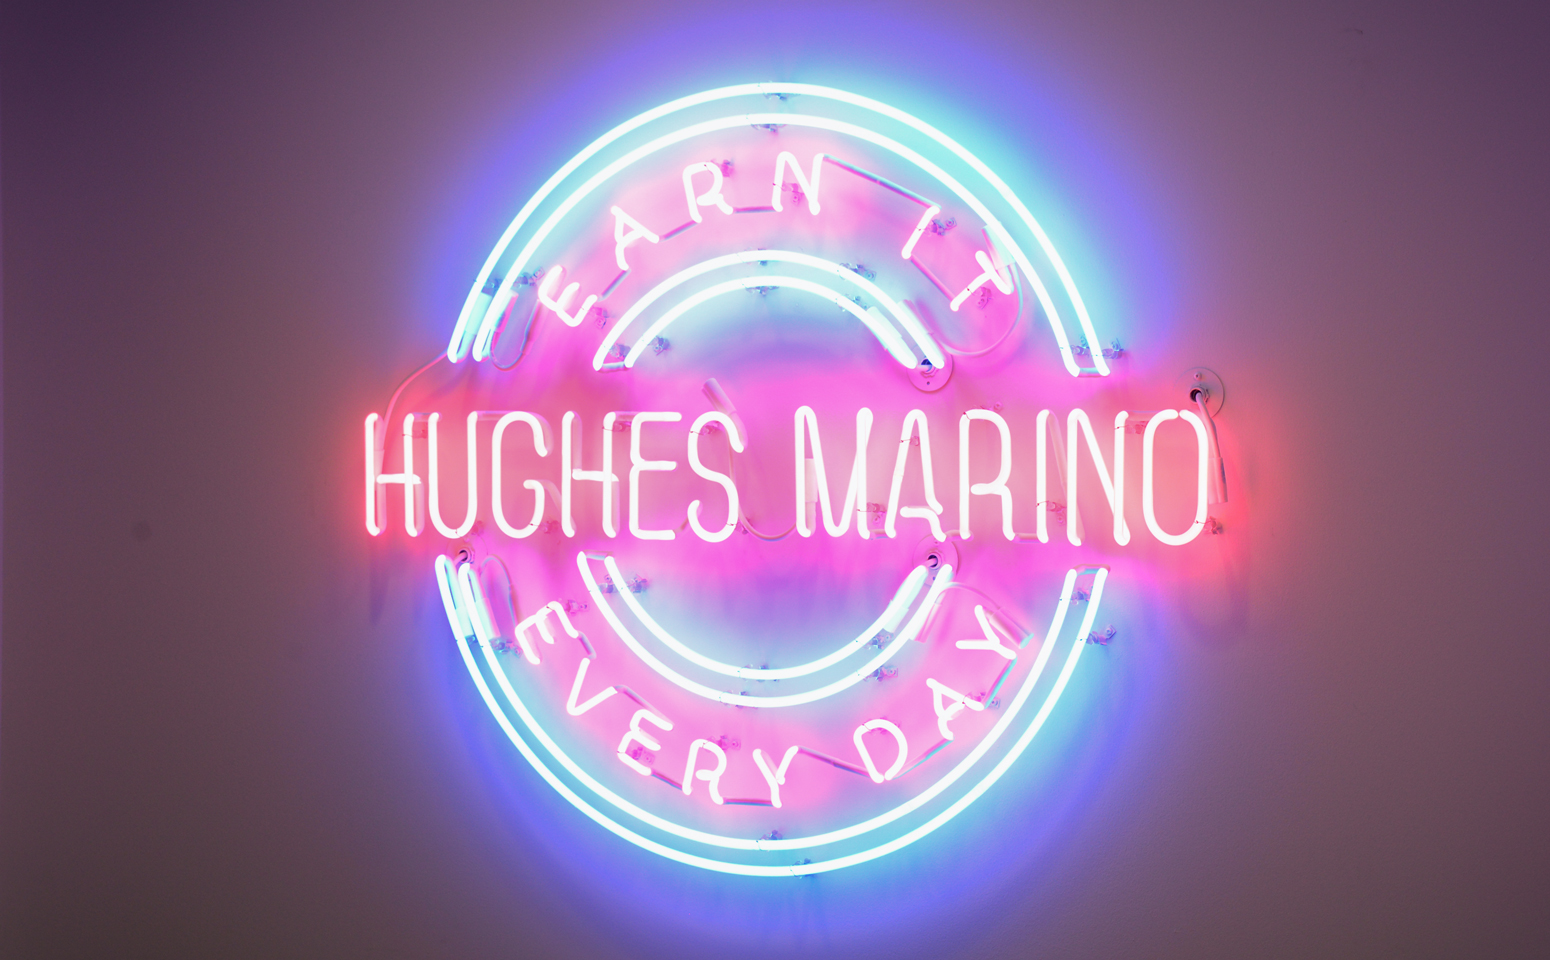 Hughes Marino orange county neon sign 2